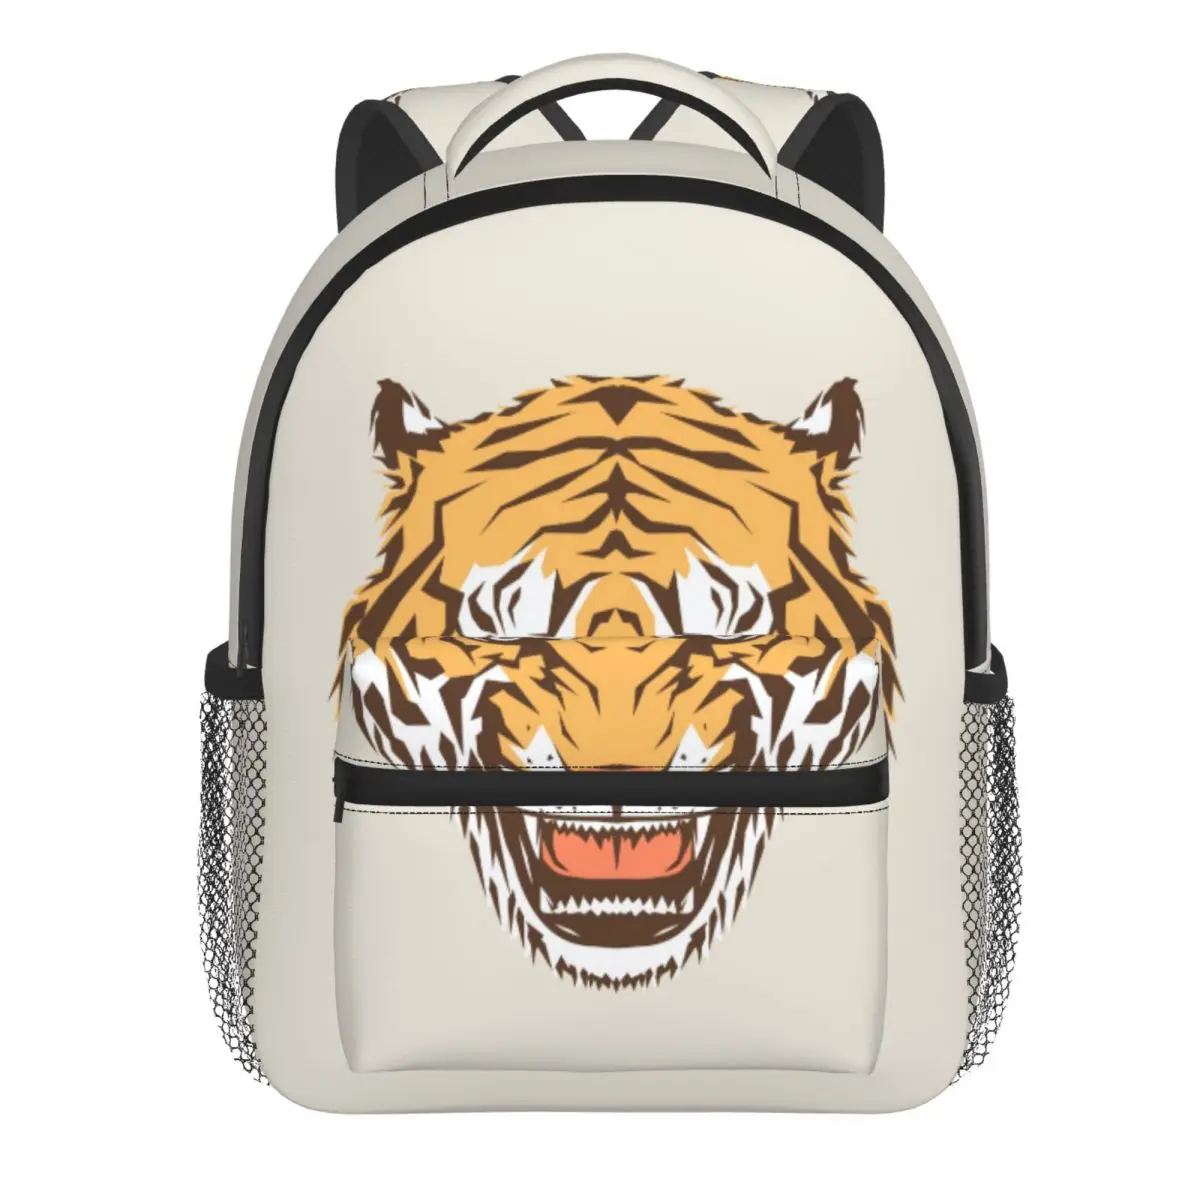 Tiger Head Kids Backpack Toddler School Bag Kindergarten Mochila for Boys Girls 2-5 Years